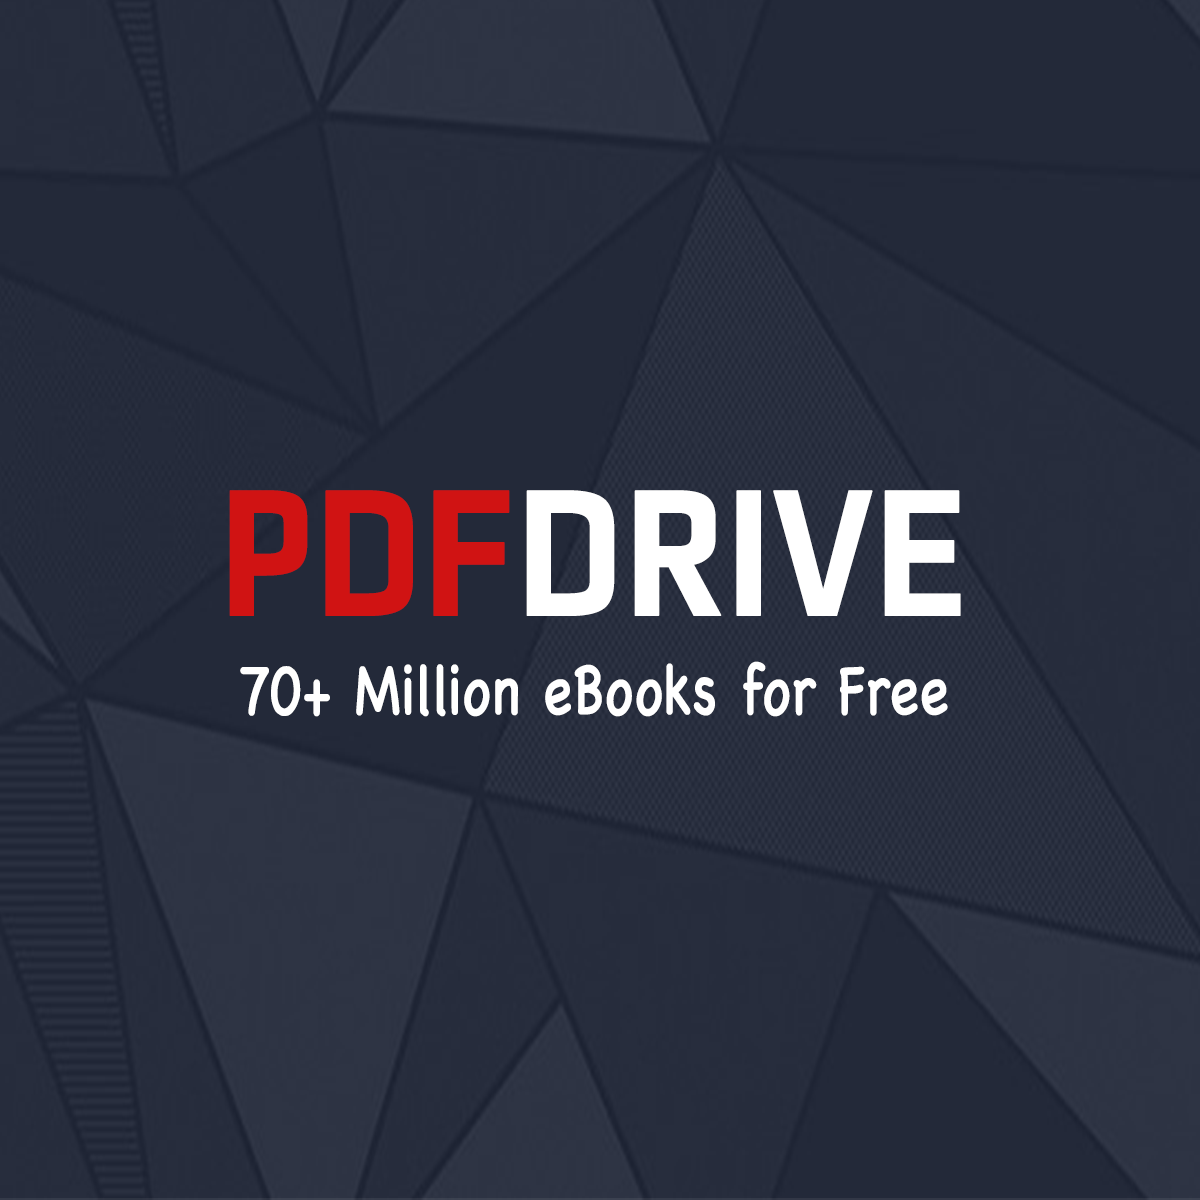 Pdfdrive PDF reader